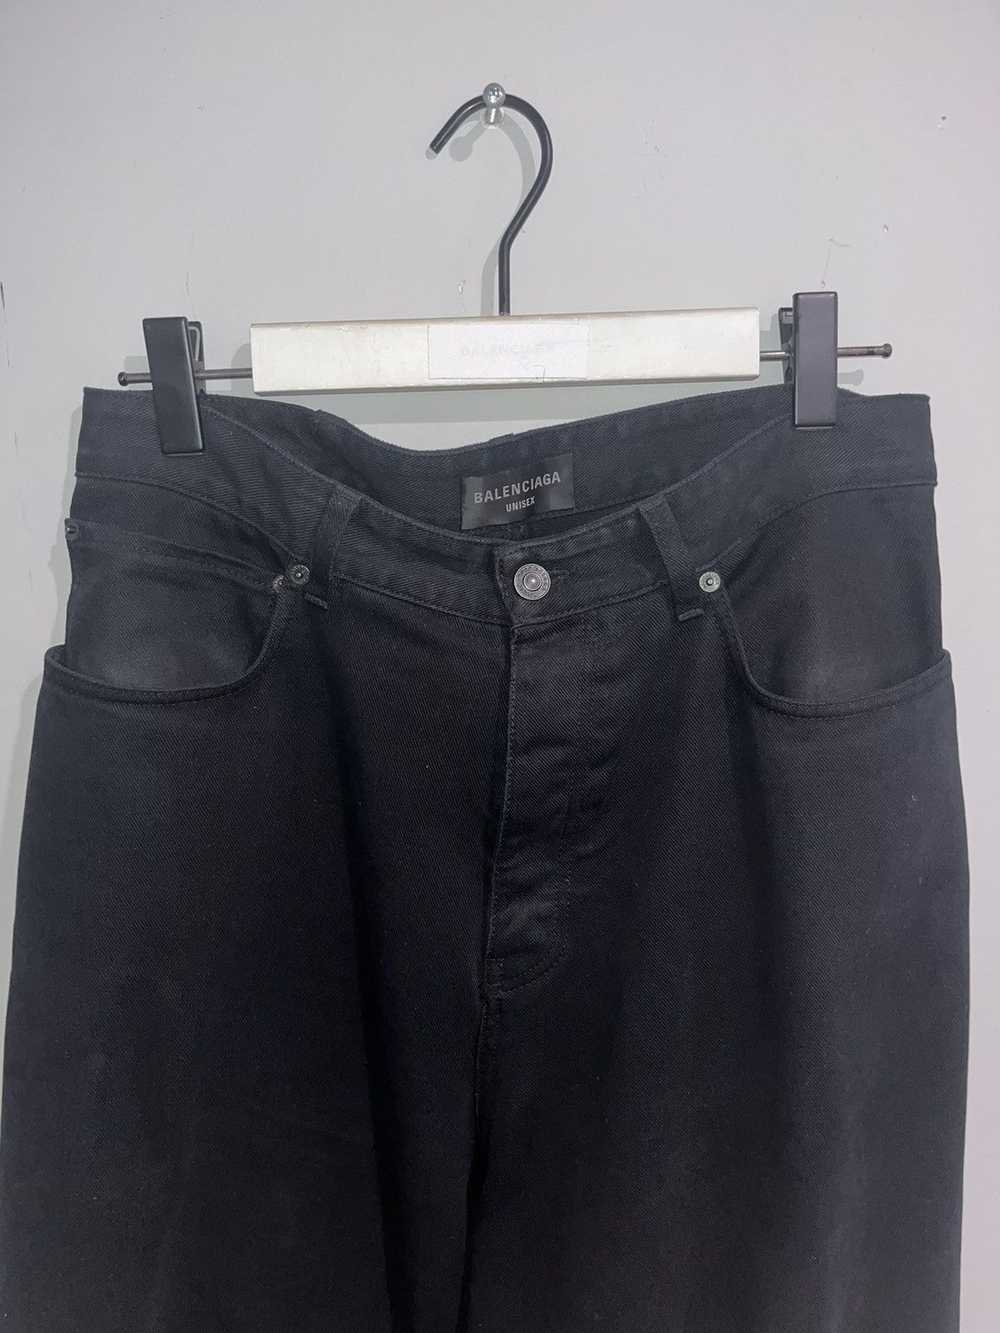 Balenciaga Baggy Pants in black soft left hand de… - image 3